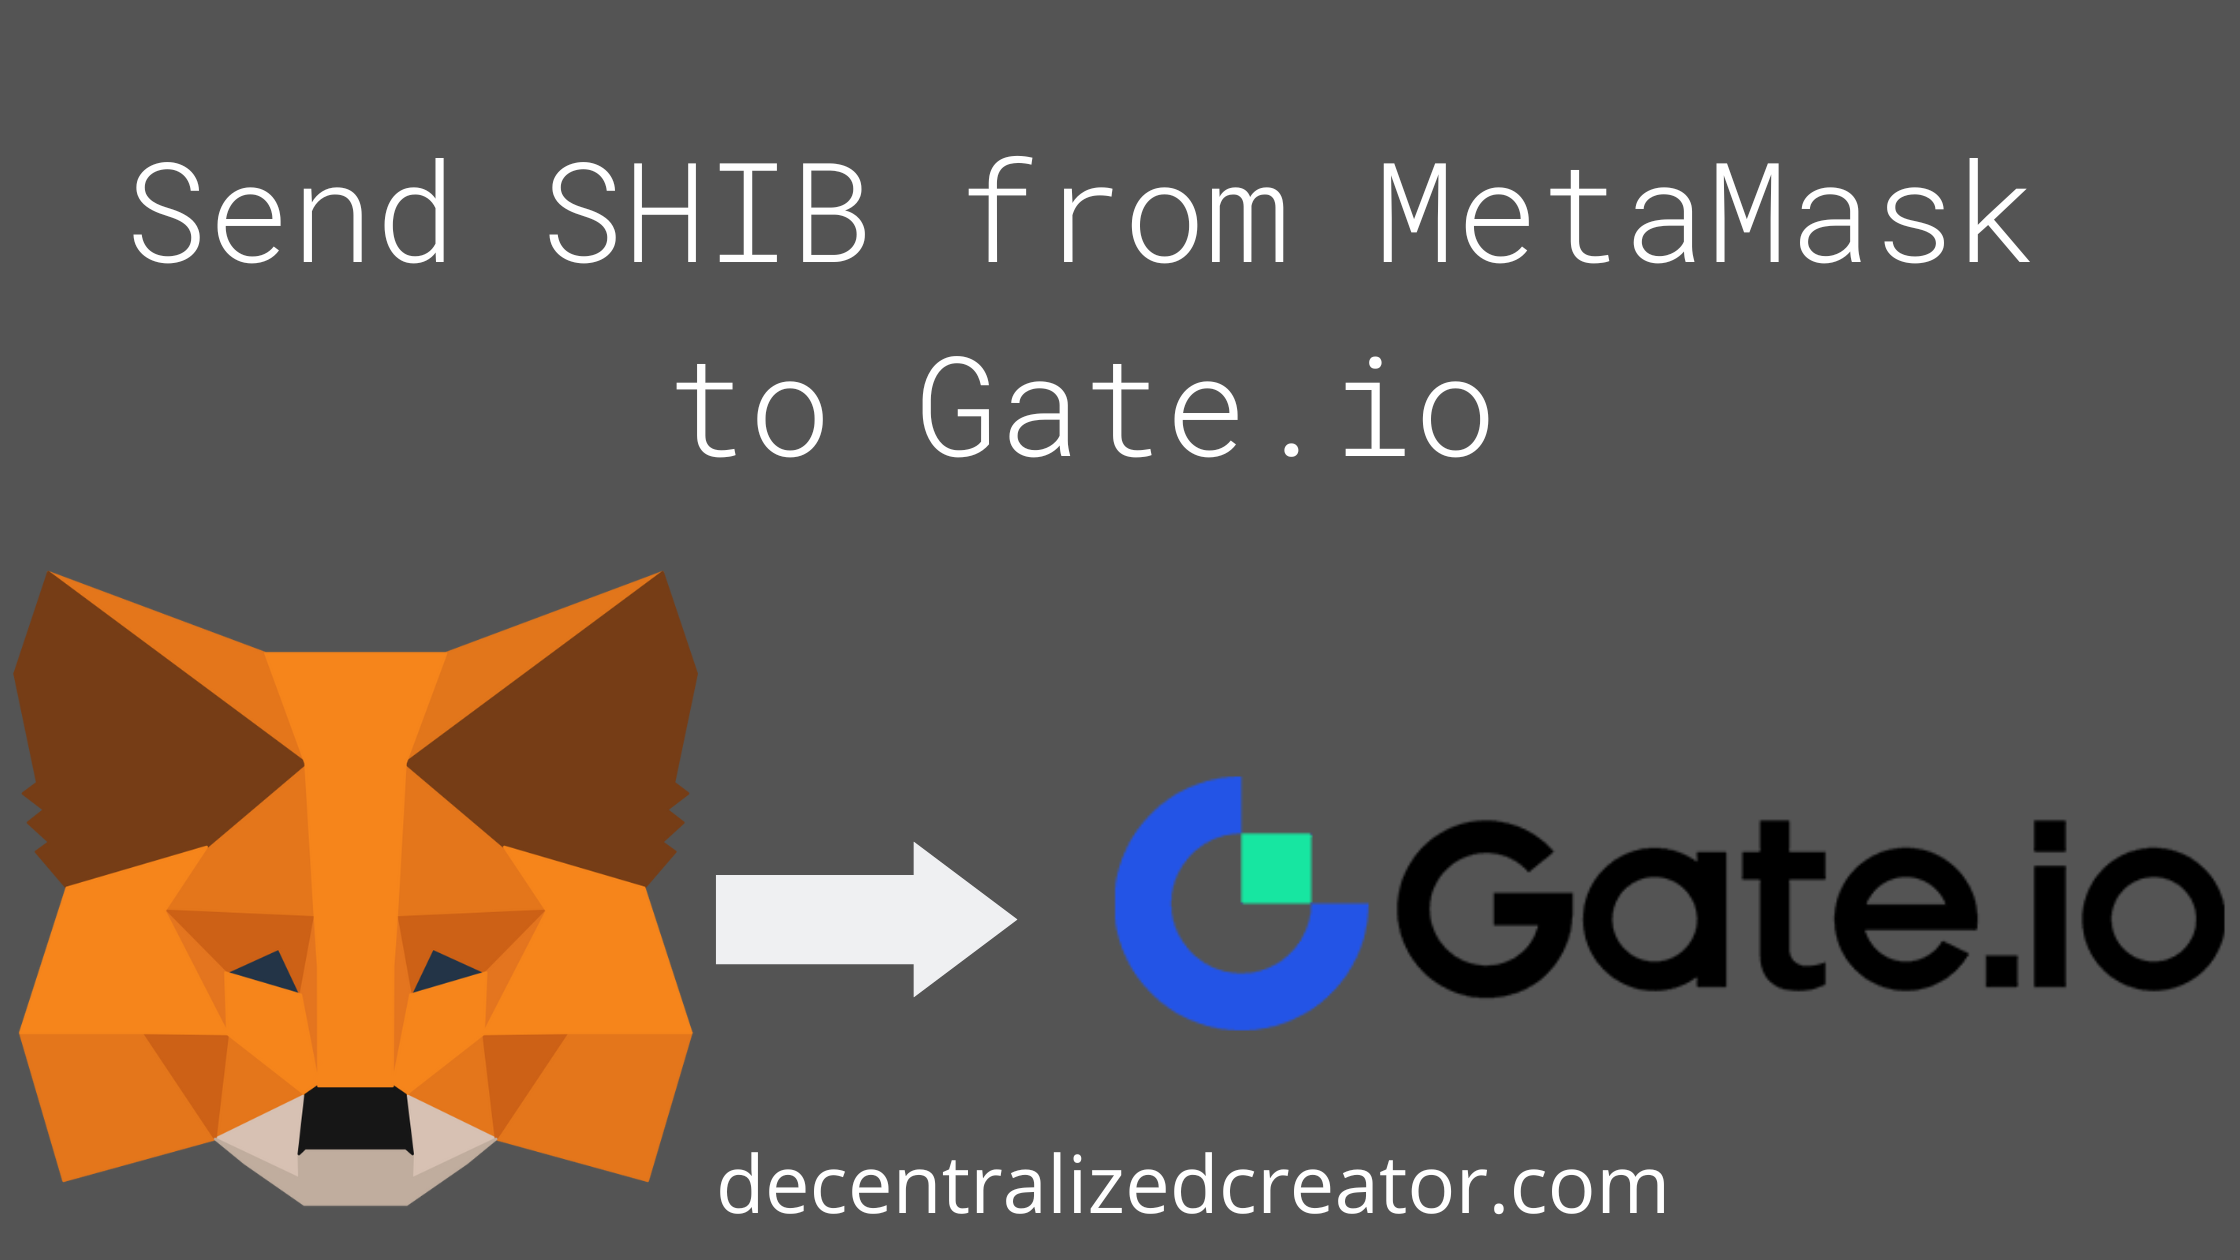 Send SHIB from MetaMask to Gate.io